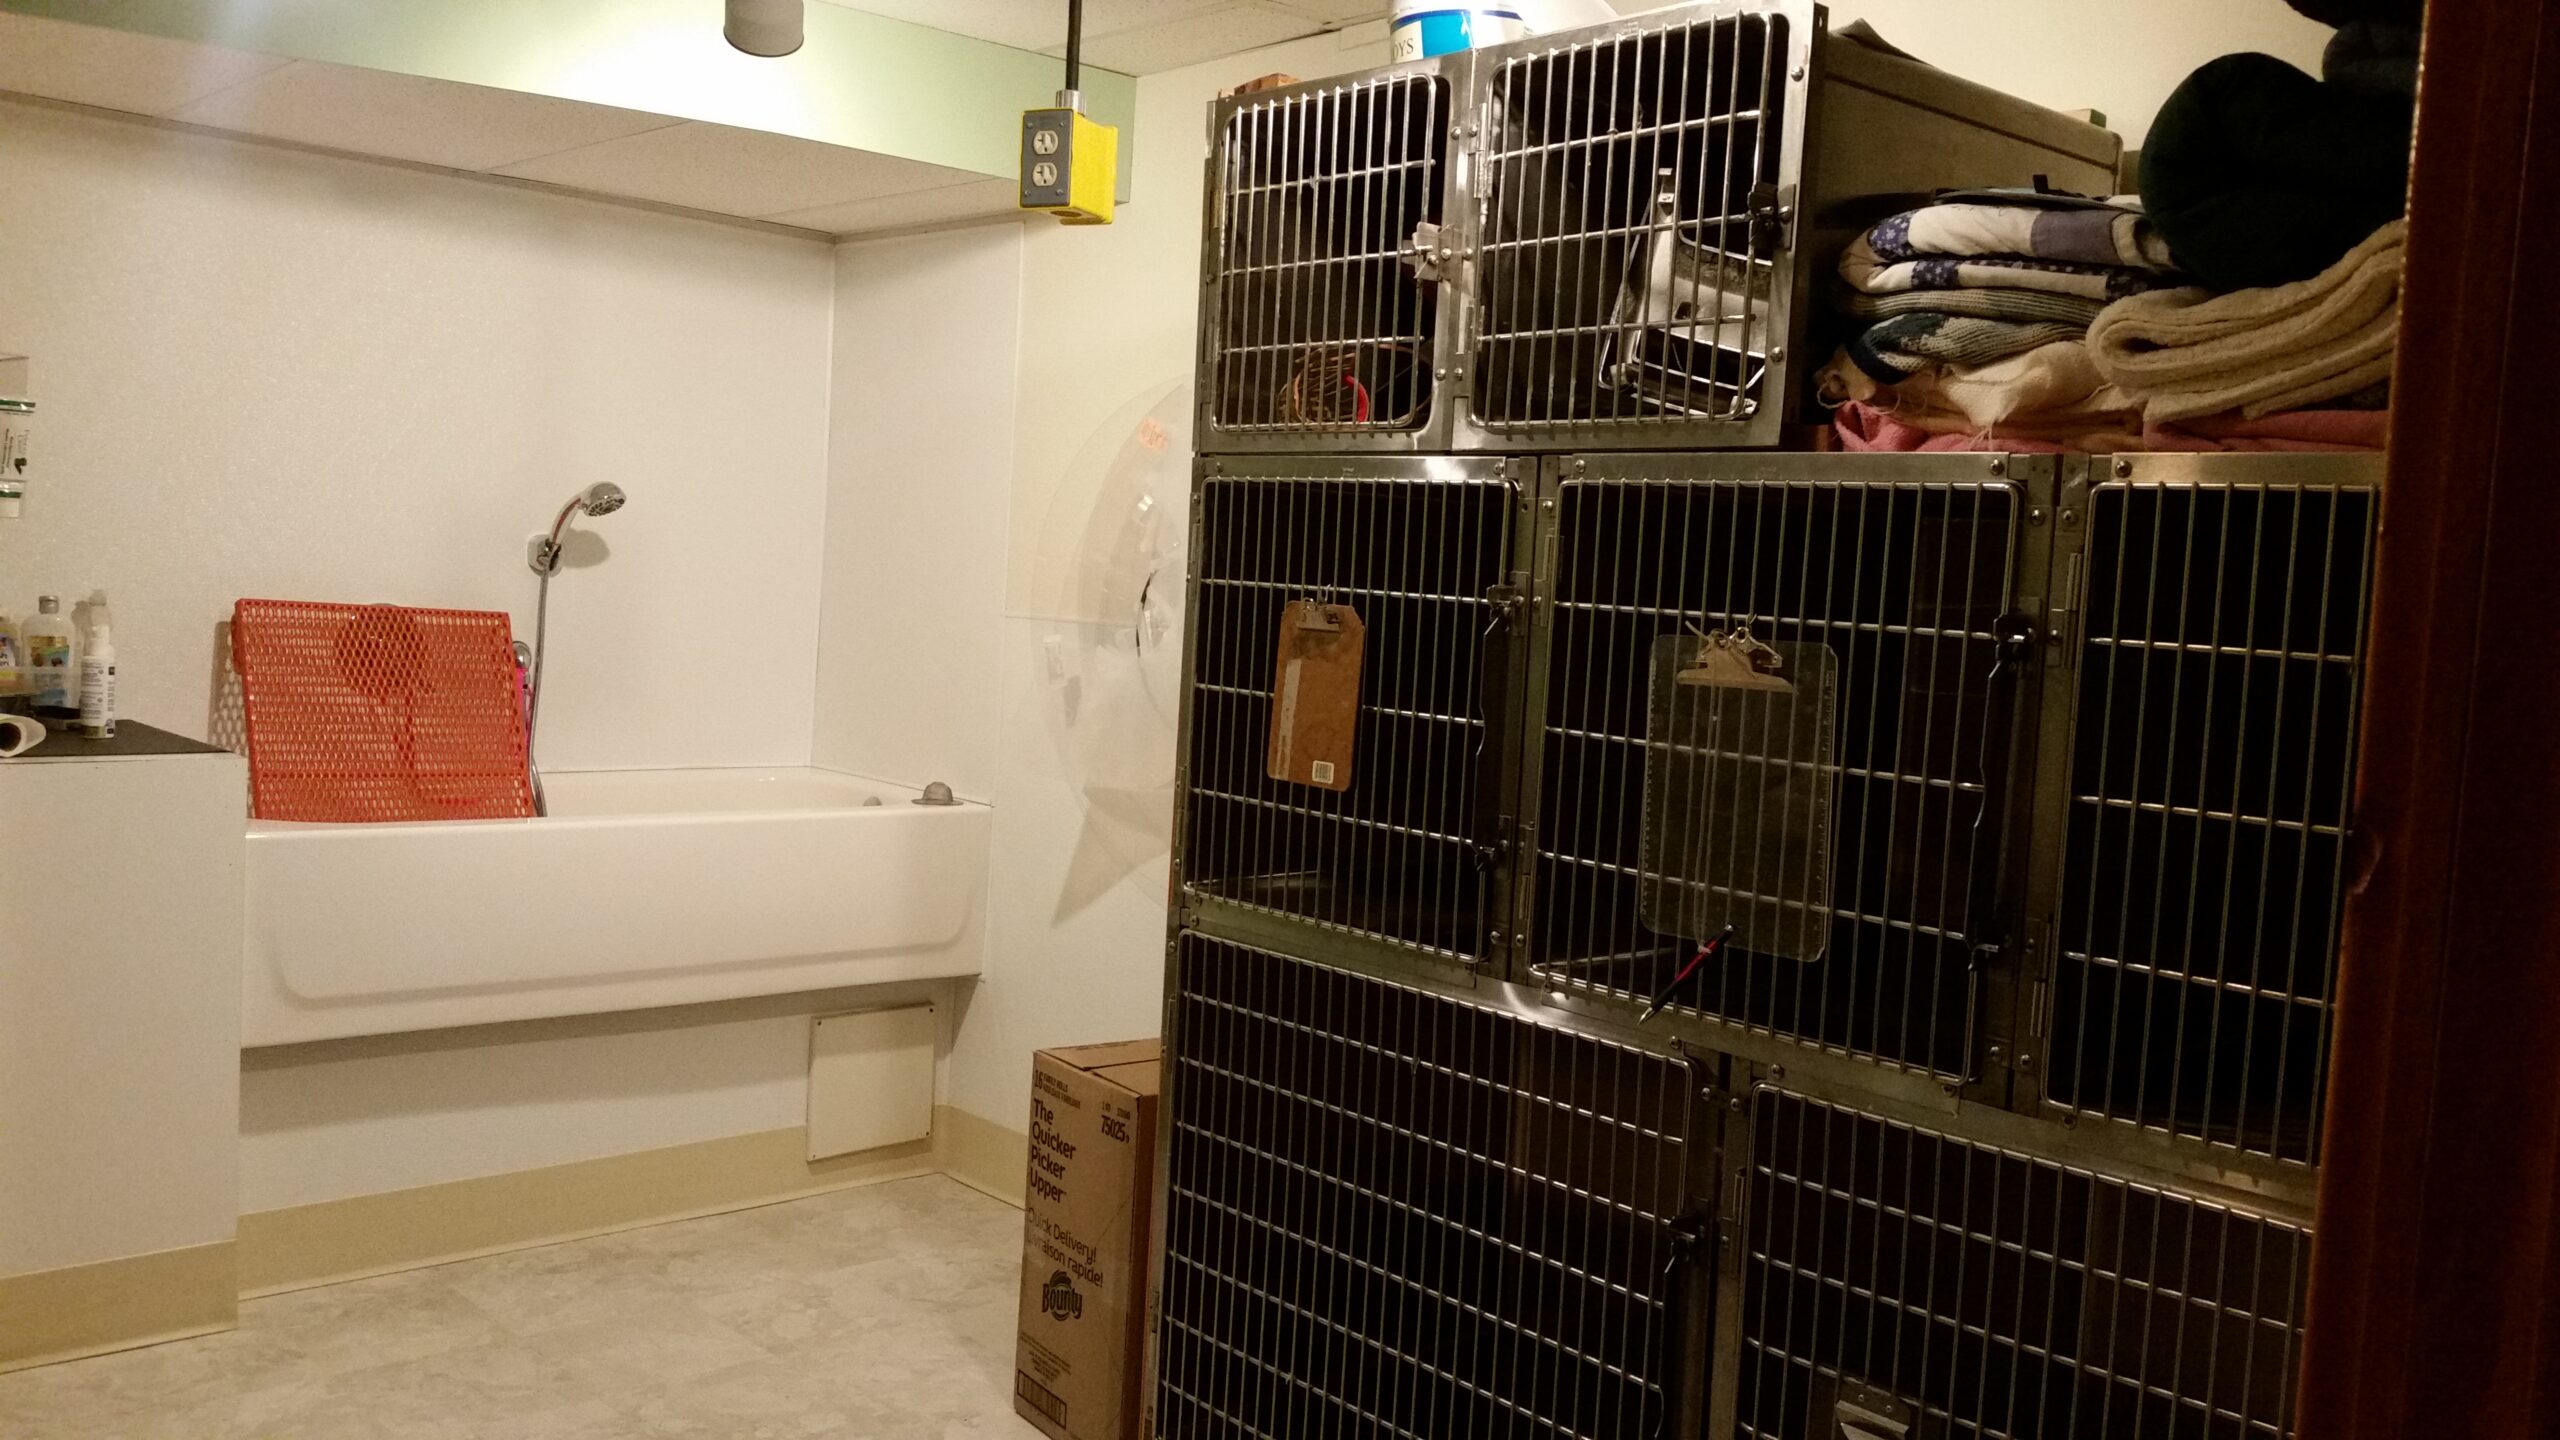 Ark Animal Hospital Dog kennel Room